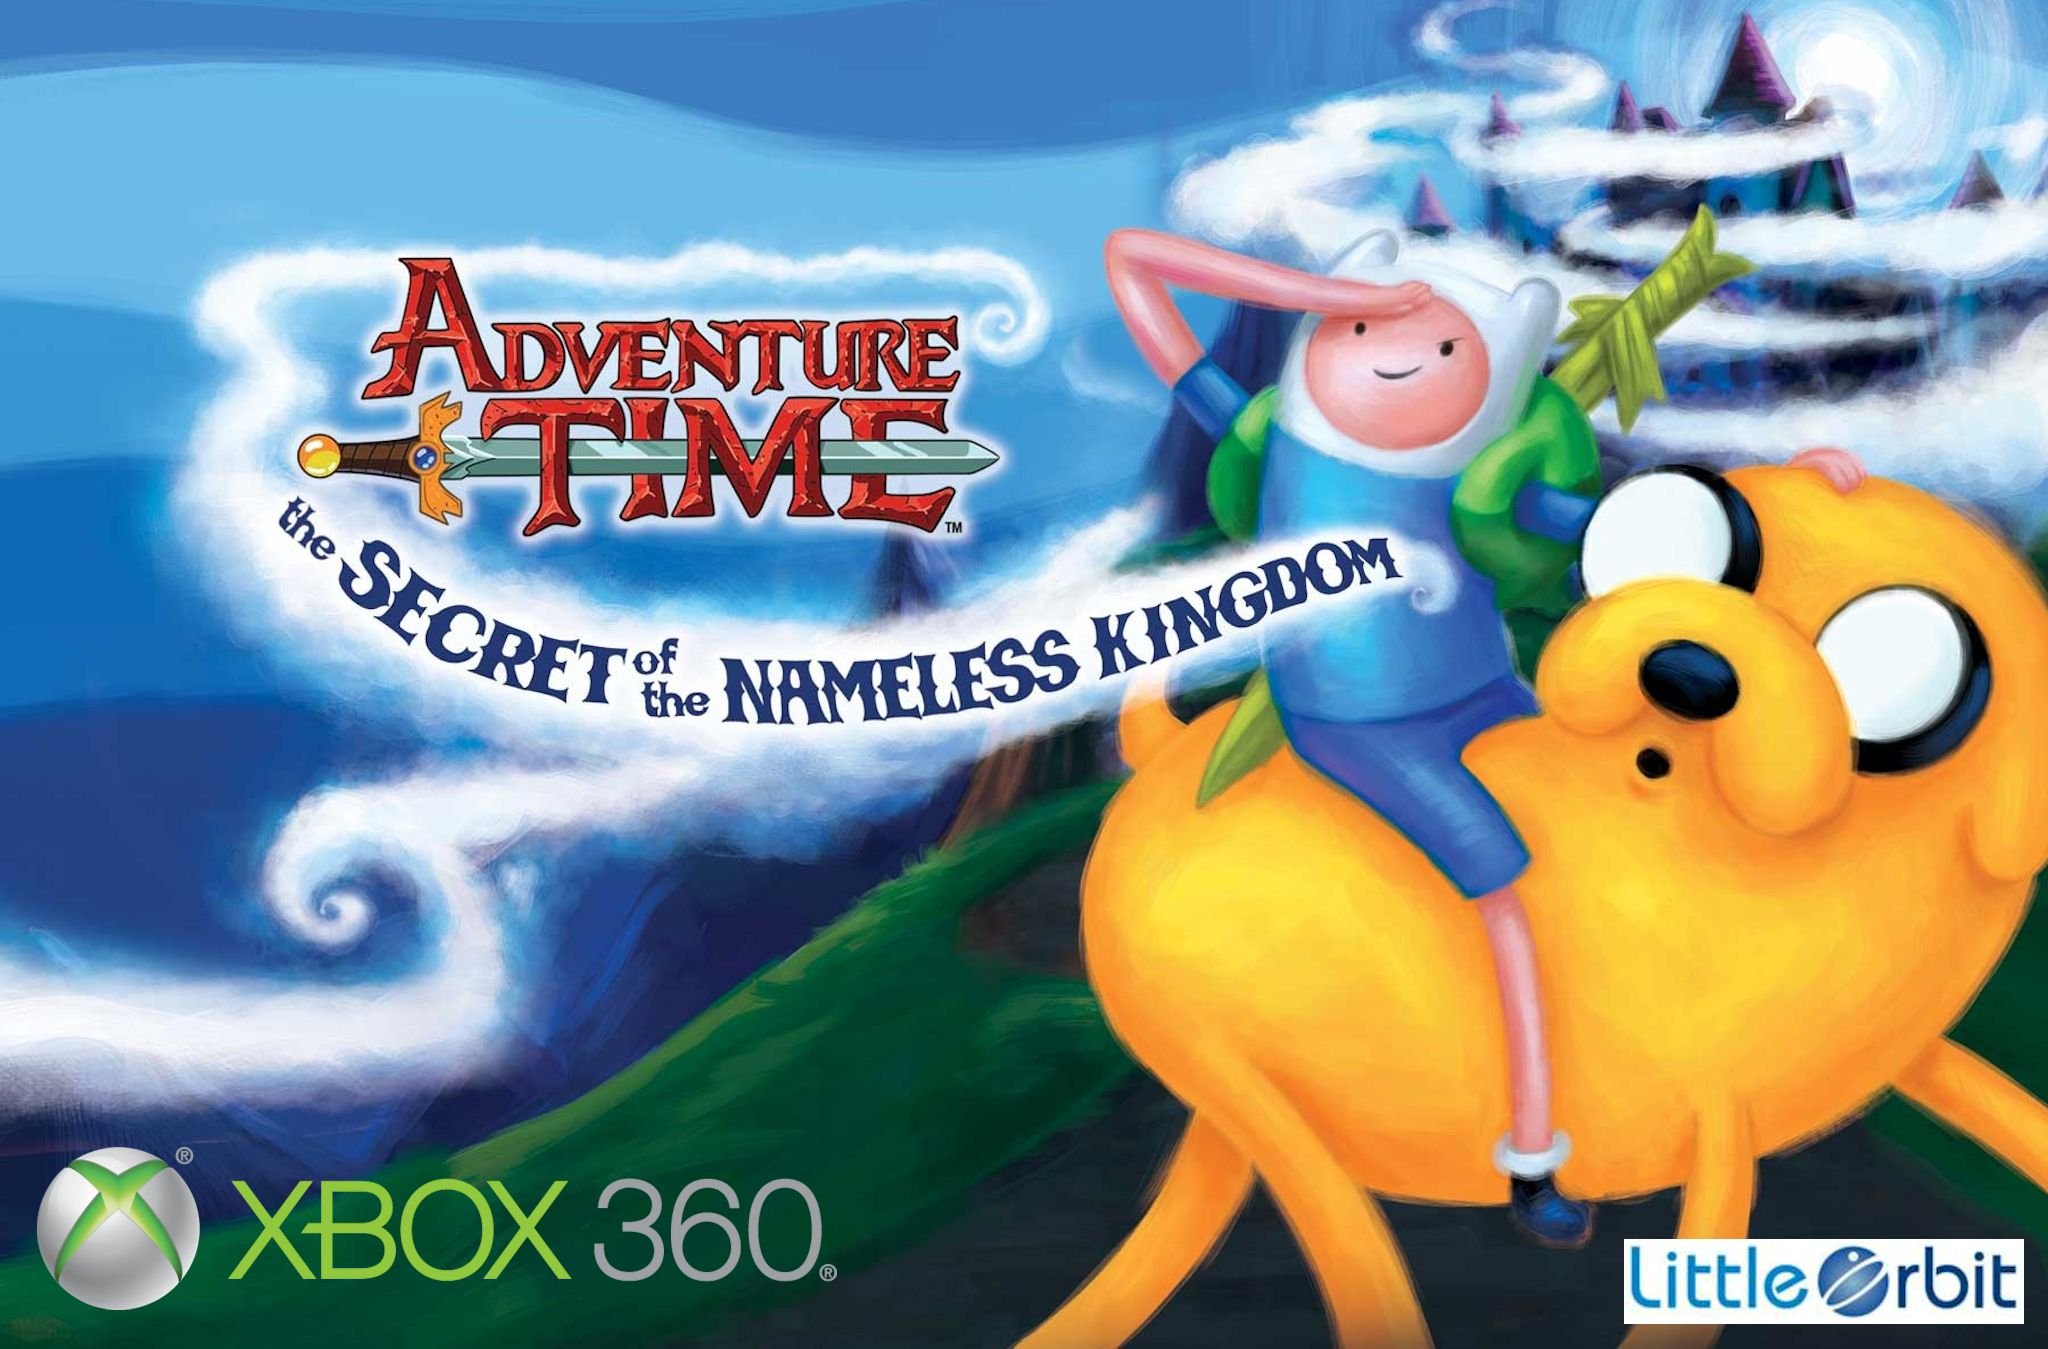 Adventure-Time-Secret-of-the-Nameless-Kingdom-Xbox-360-interview-main.jpg